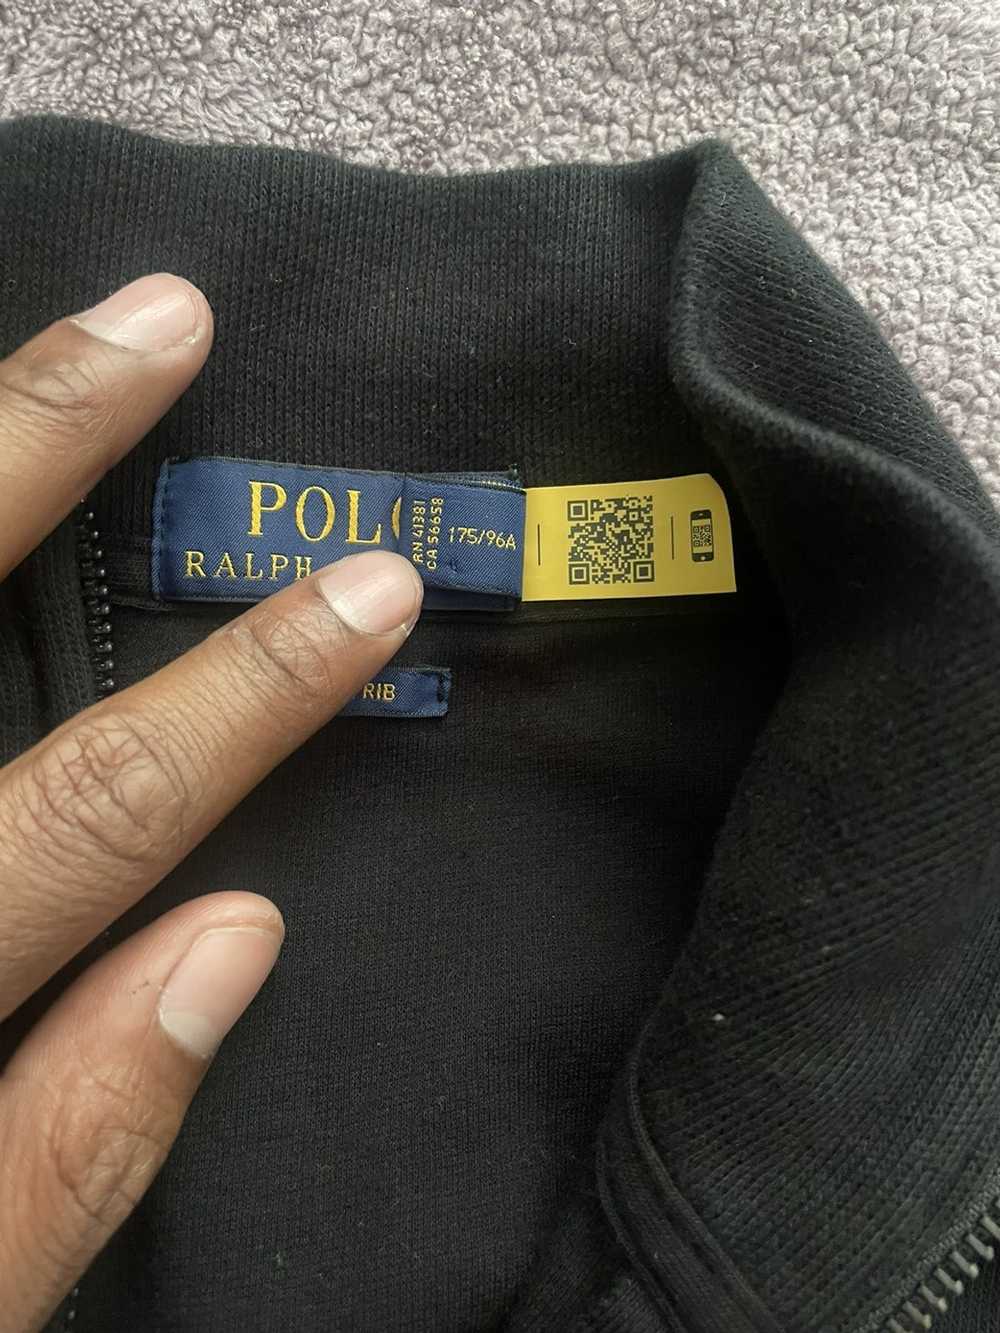 Polo Ralph Lauren Polo Ralph Lauren pullover - image 5